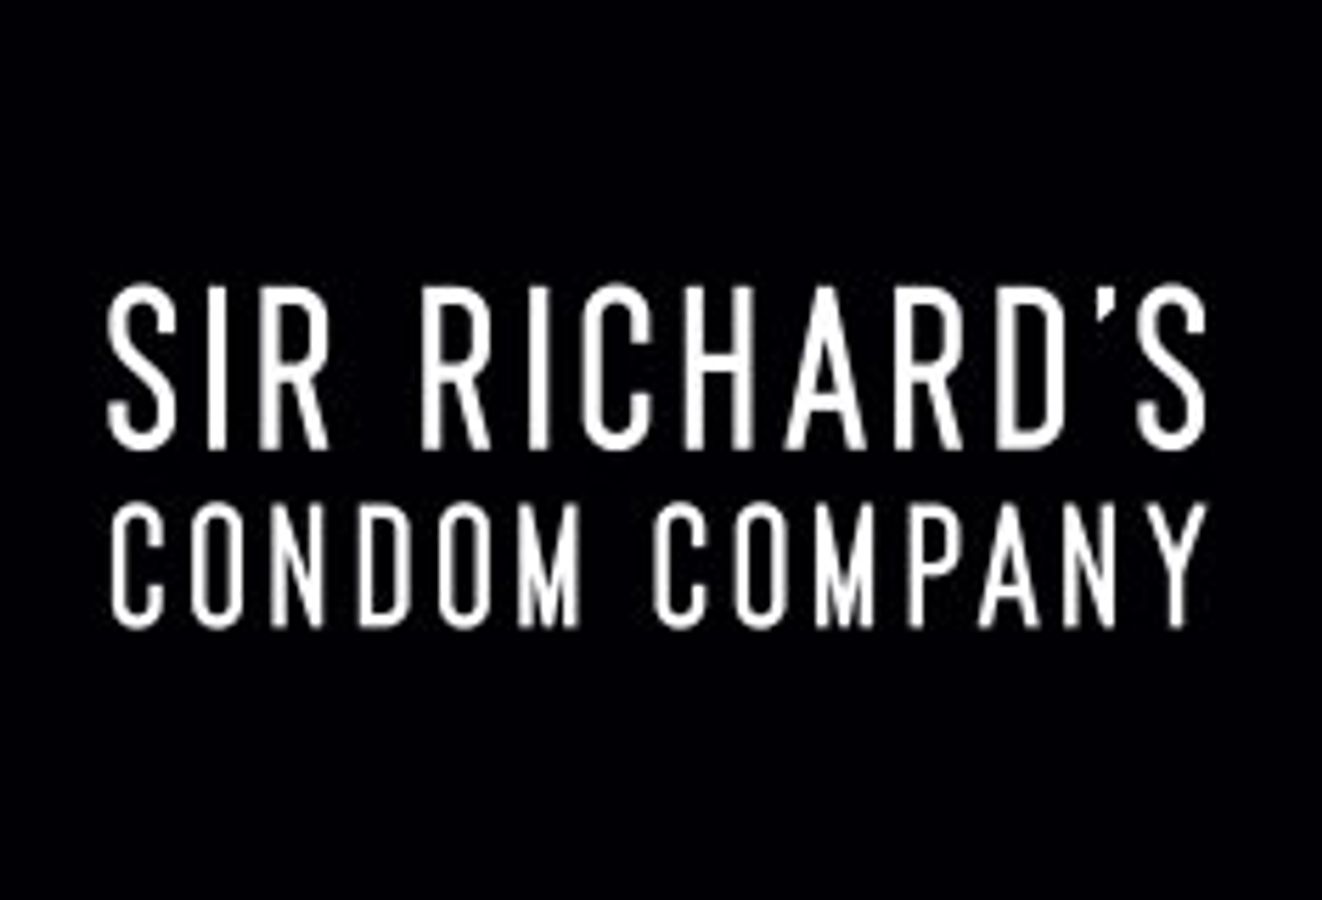 Sir Richard's Condom Company